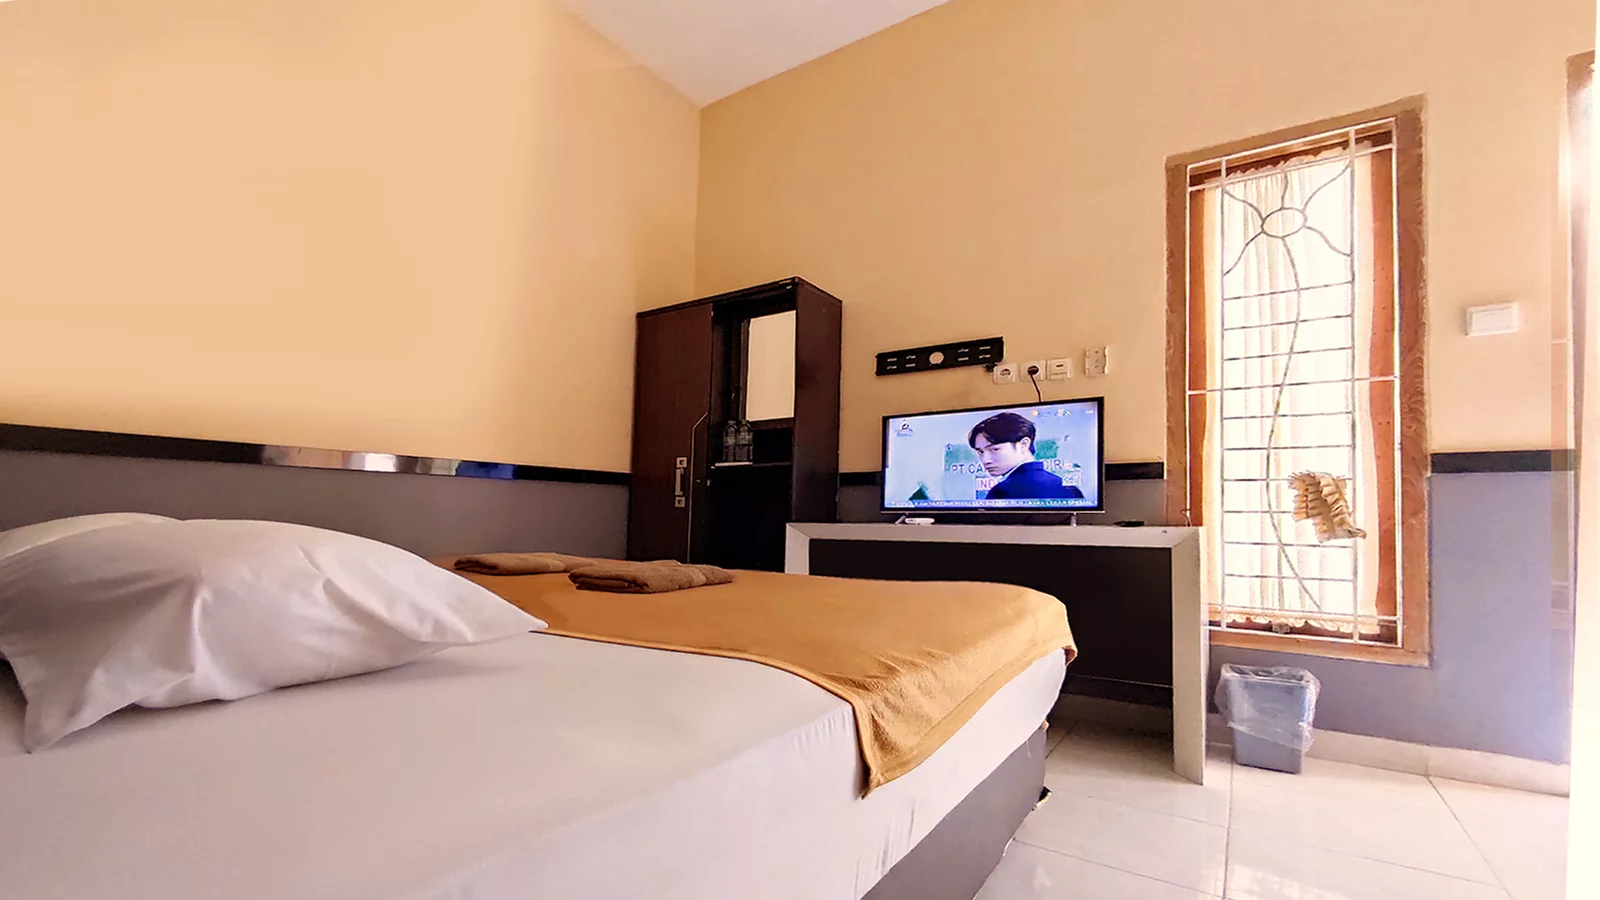 Hotel Hemat di Semarang: Pilihan Terpopuler